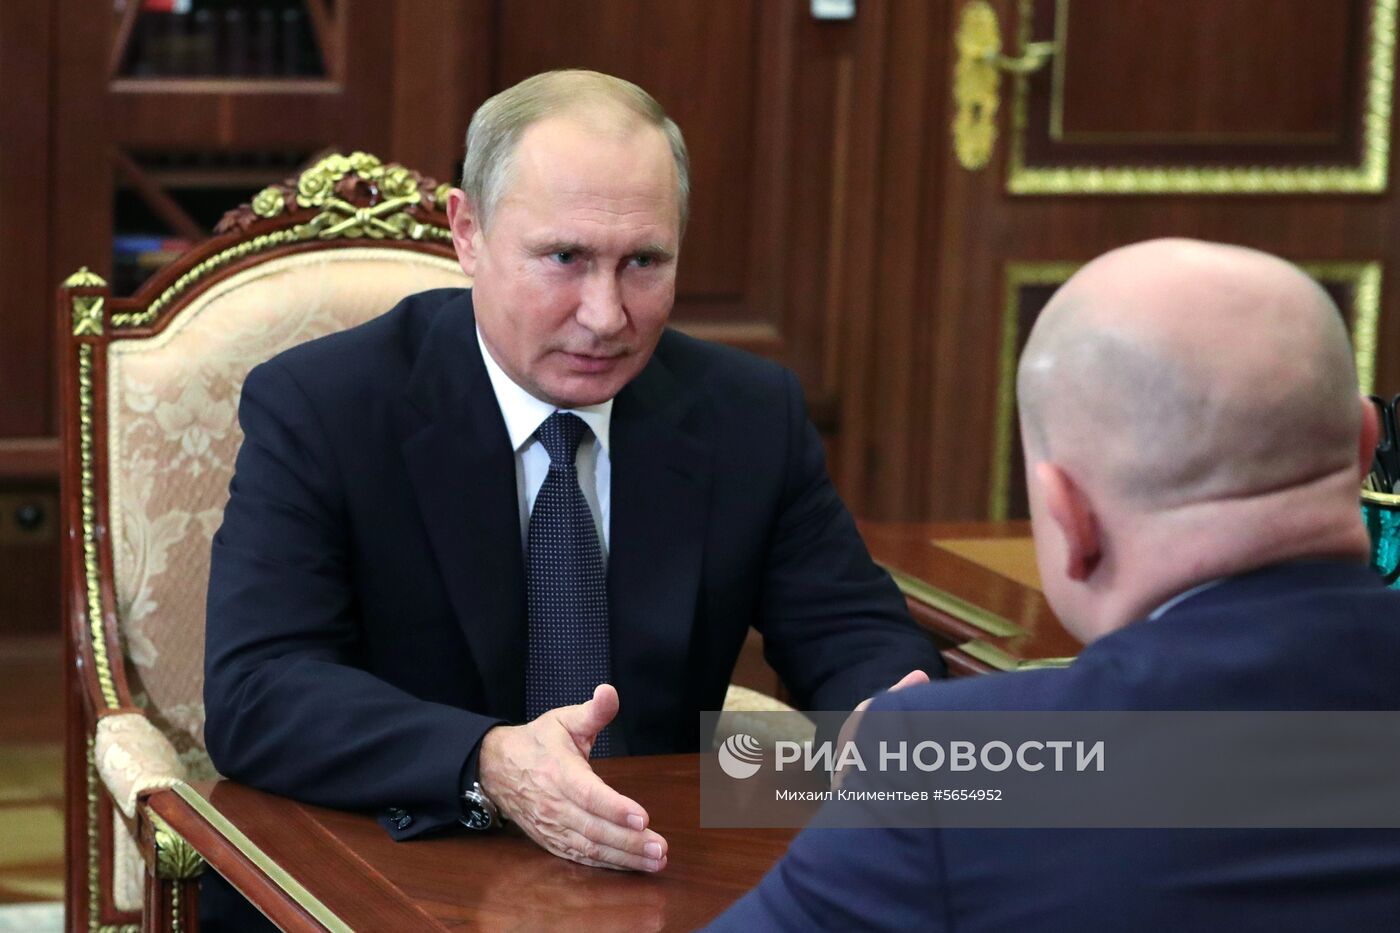 Президент РФ В. Путин встретился с М. Развожаевым